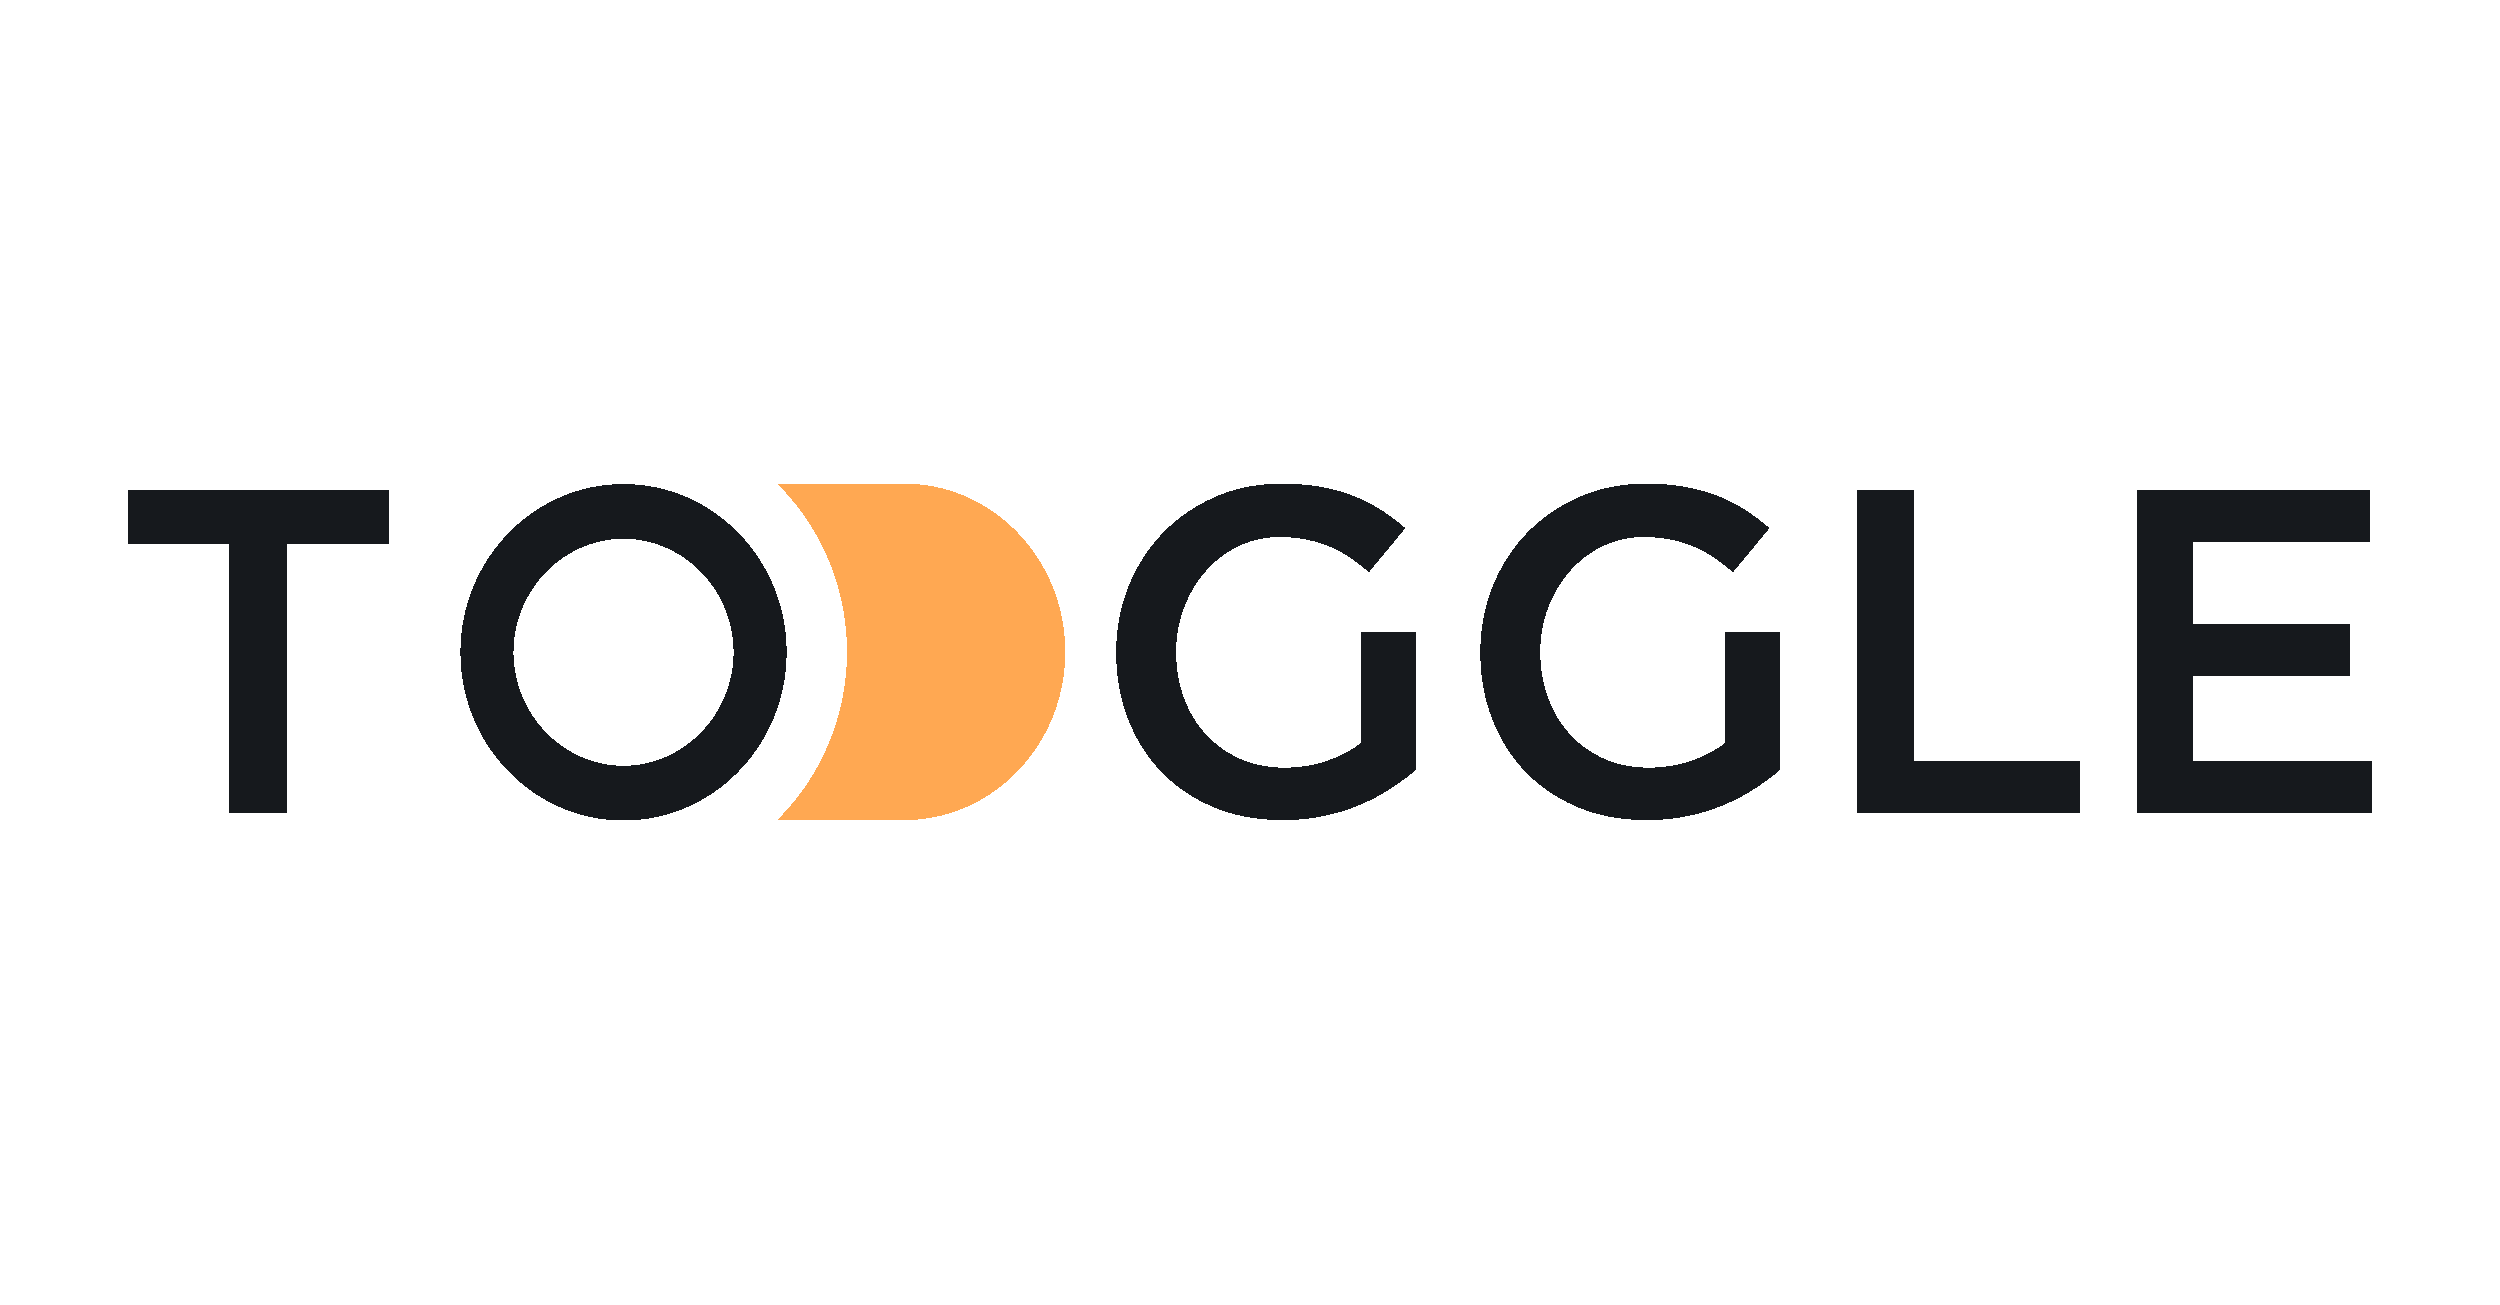 Logo of Toggle